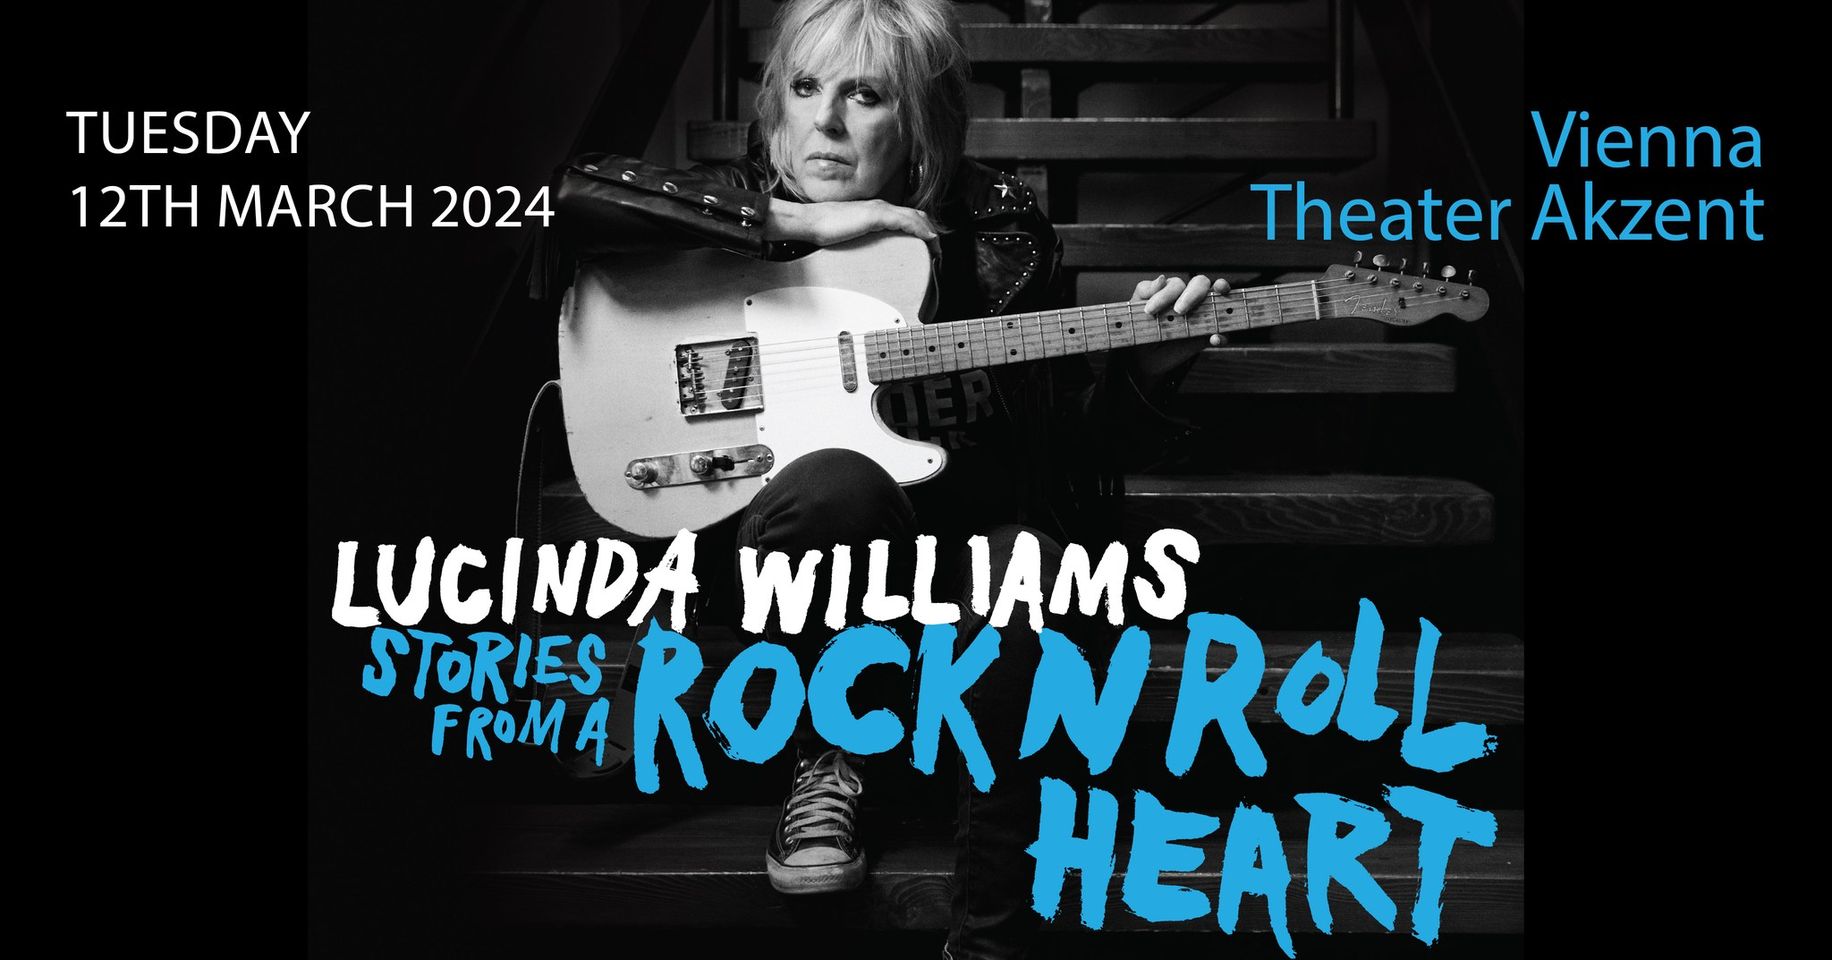 LUCINDA WILLIAMS am 12. March 2024 @ Theater Akzent.